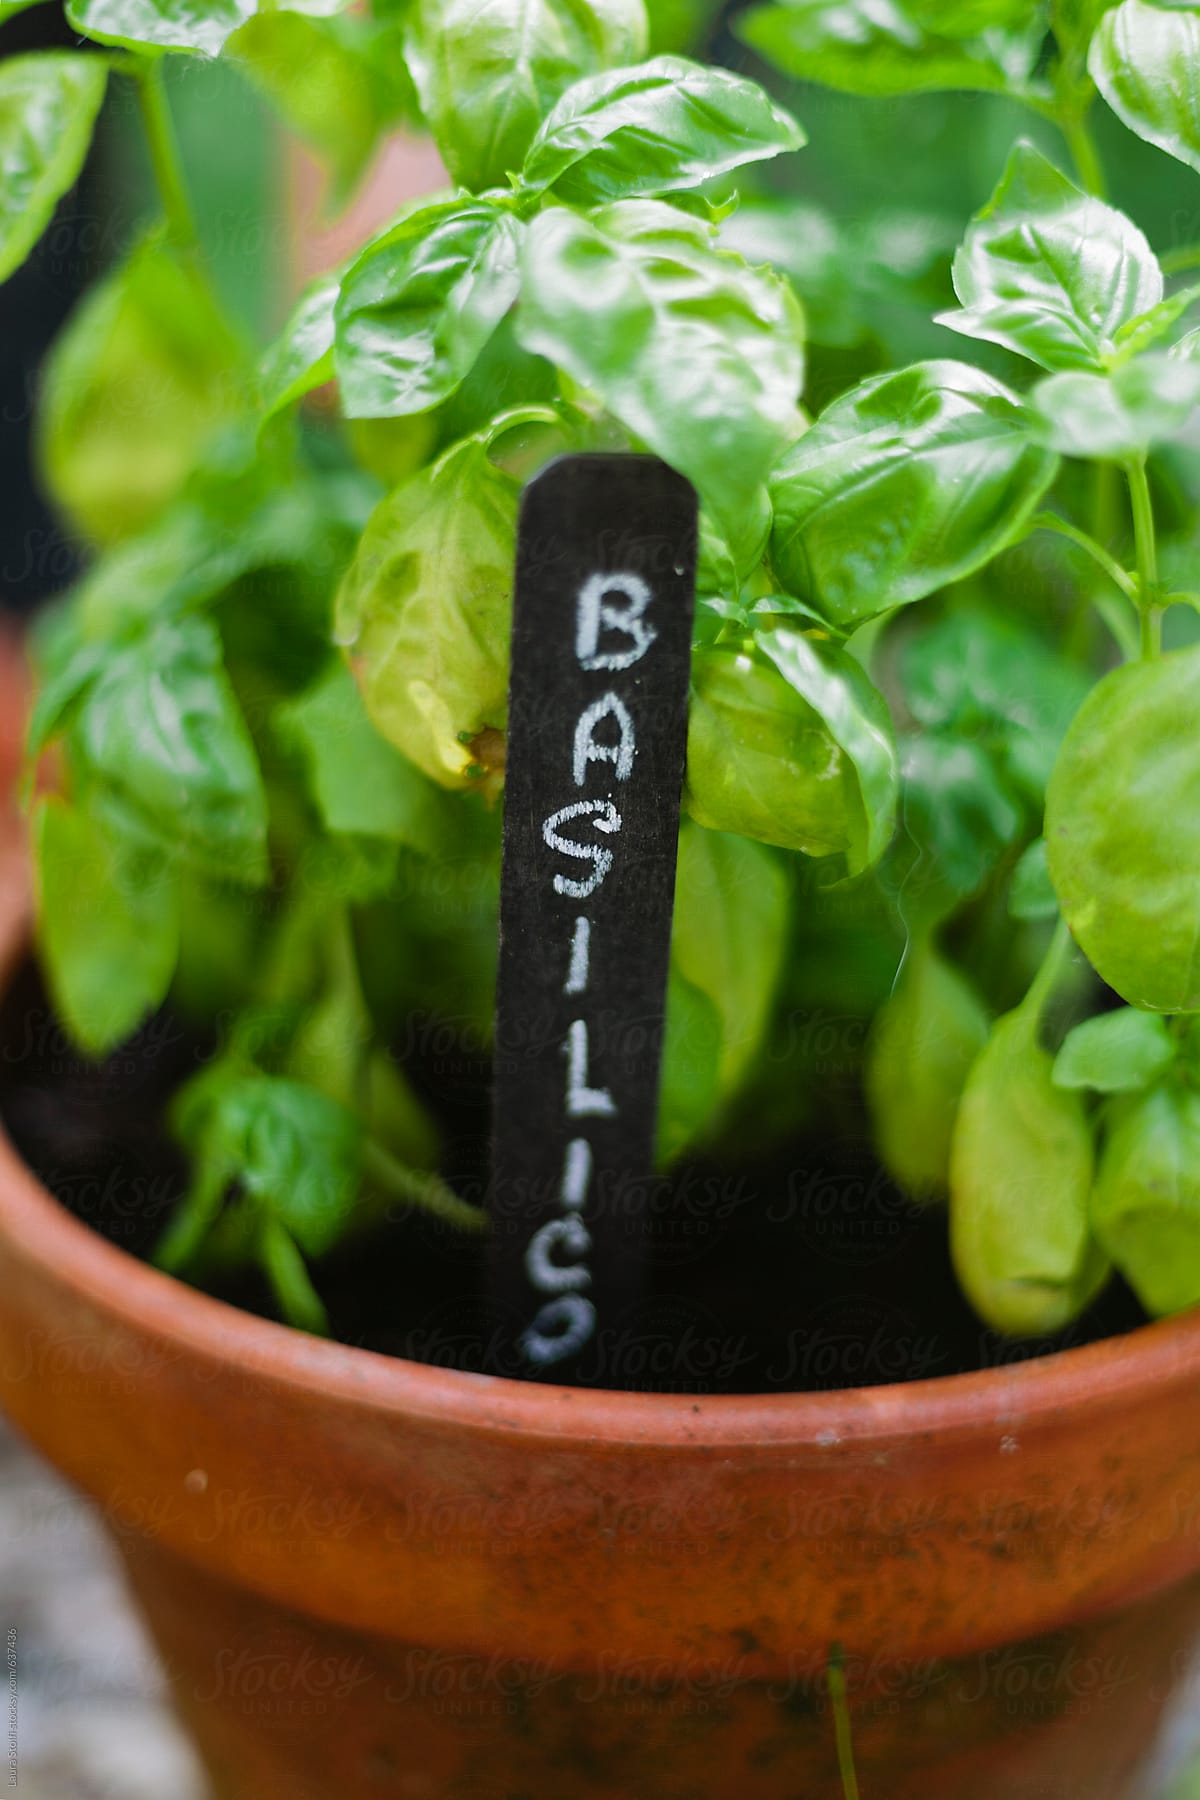 Word Basilico (basil in italian) handwritten on label in pot